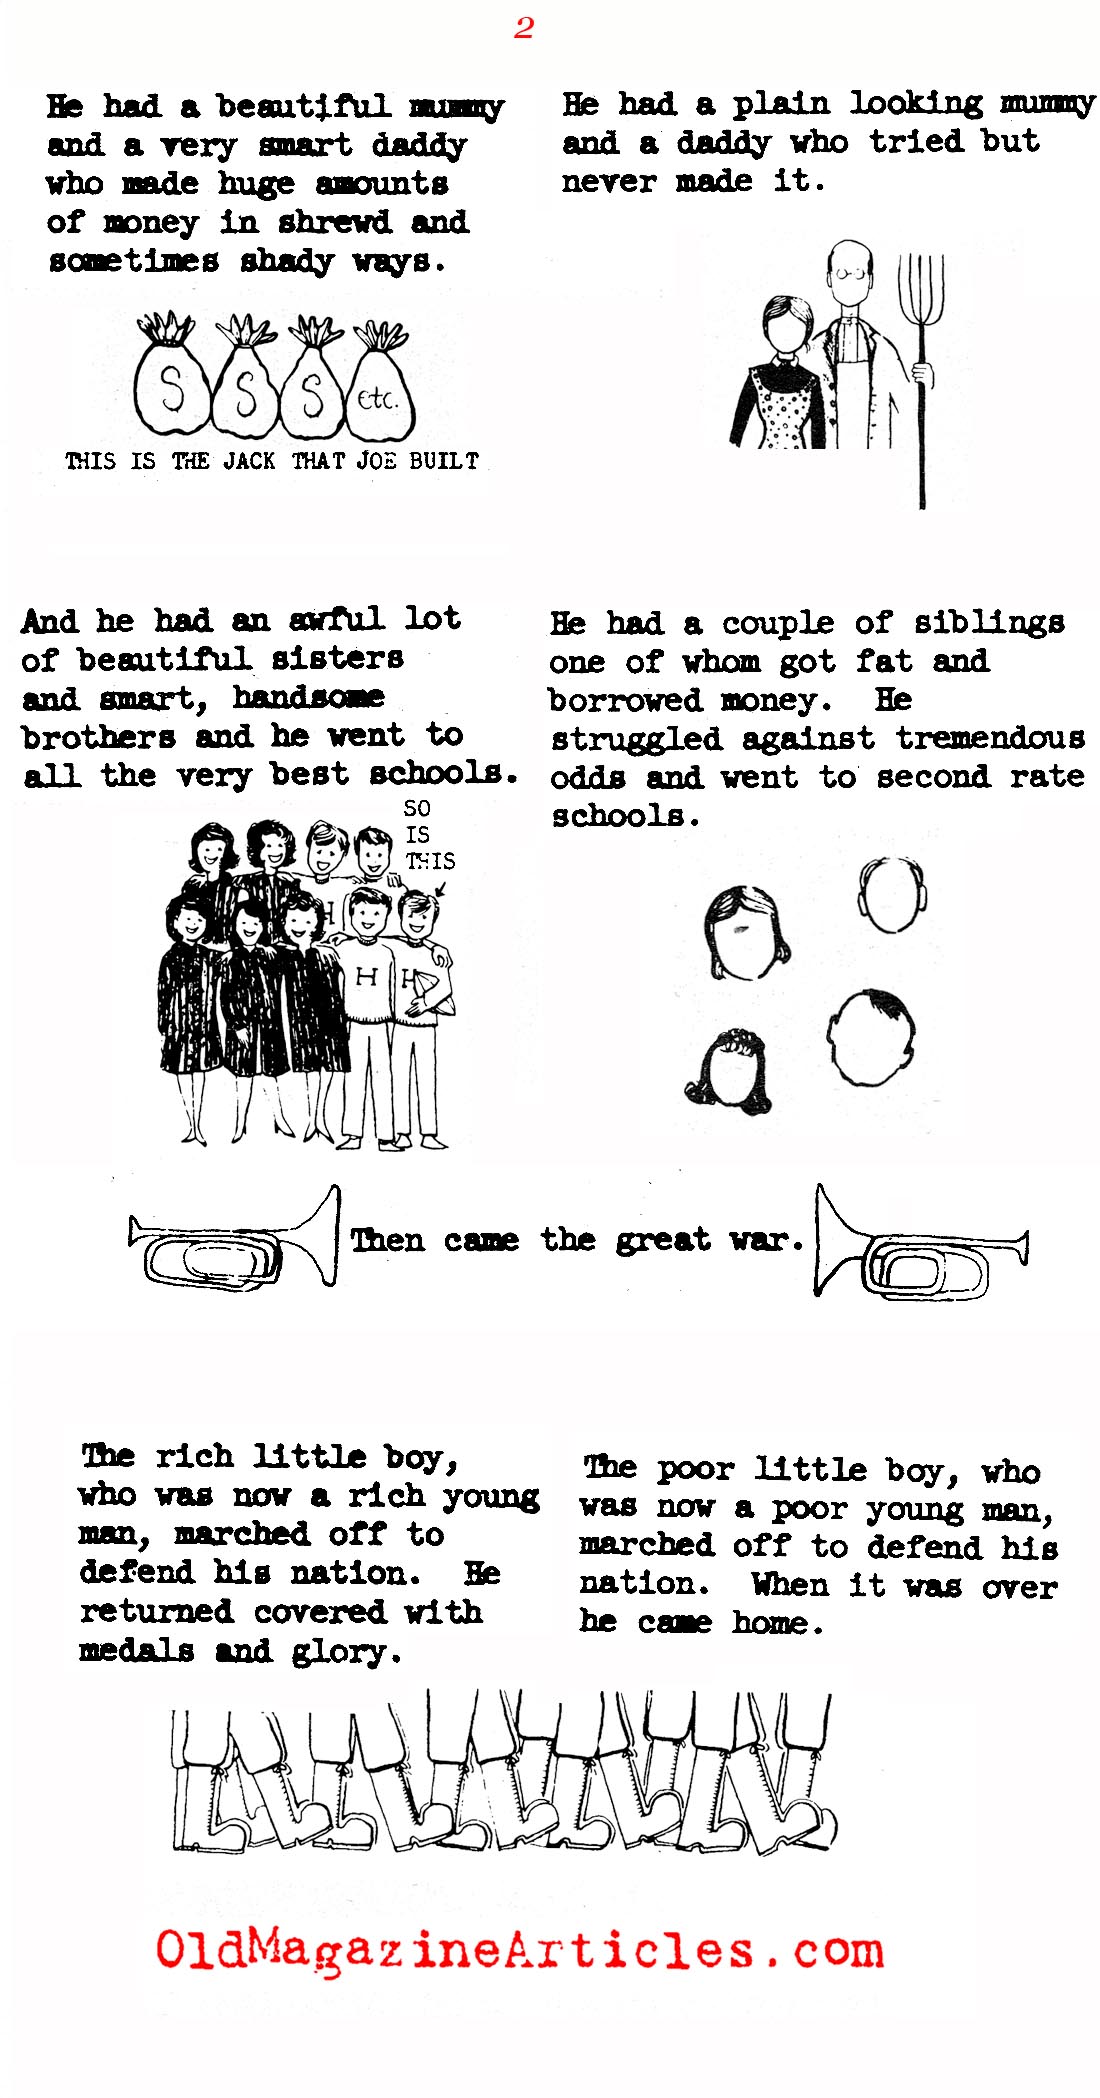 Kennedy vs. Nixon: a Cartoon (Monocle, 1961)